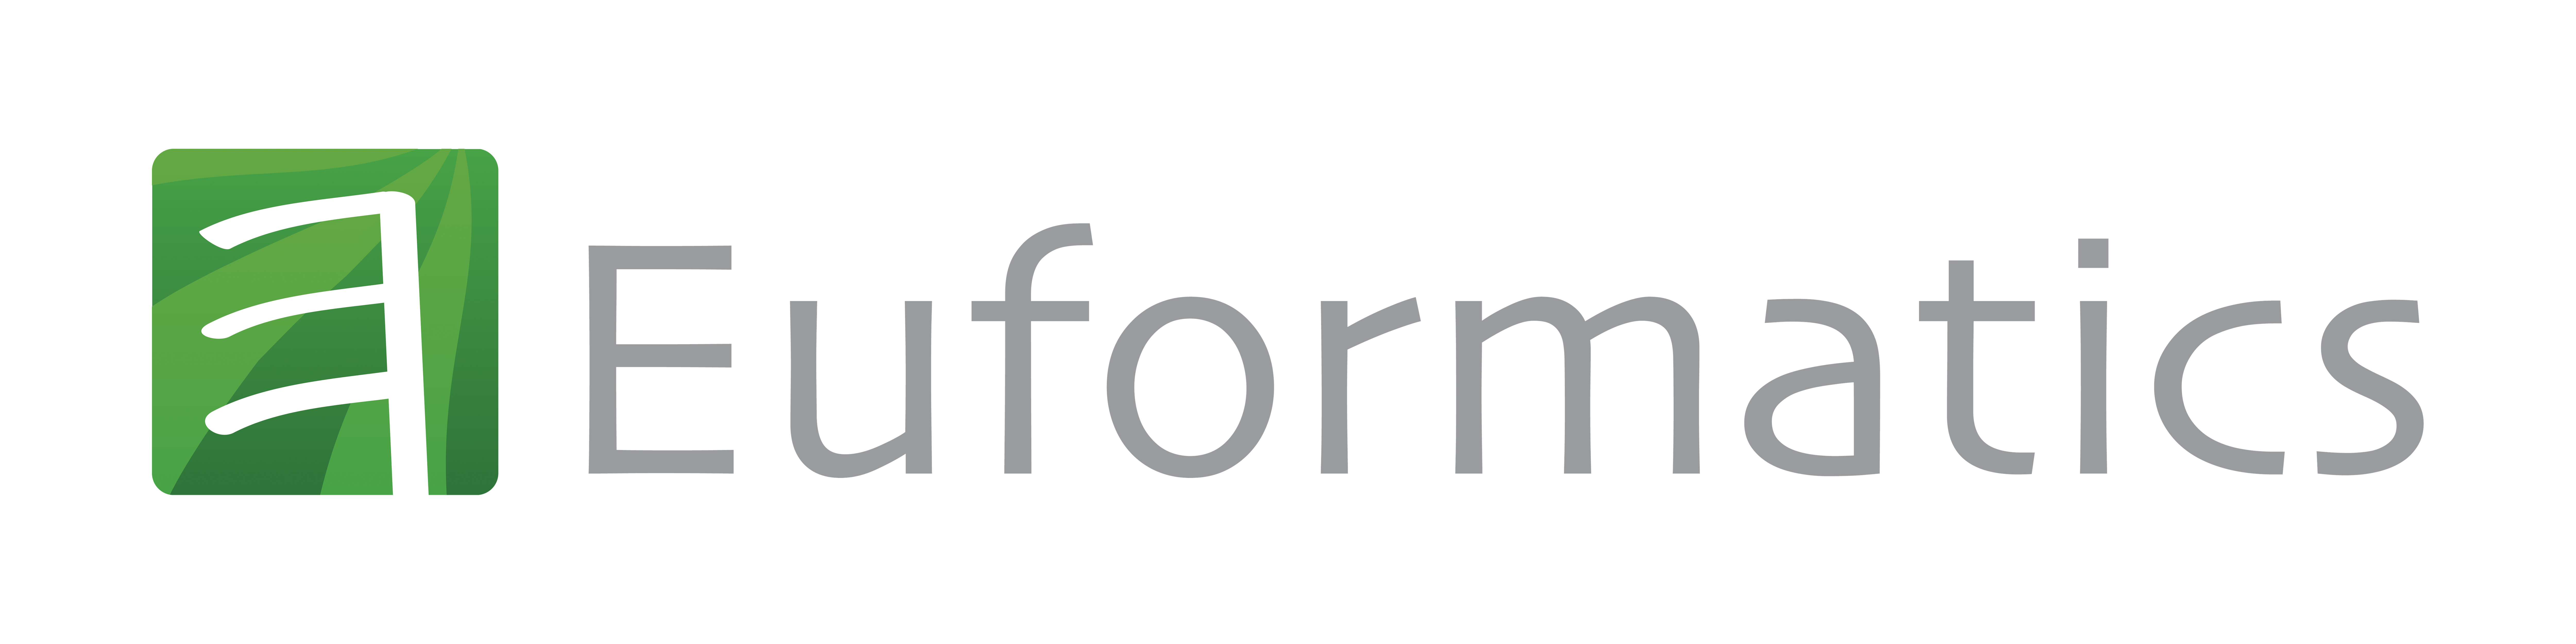 Logo Euformatics